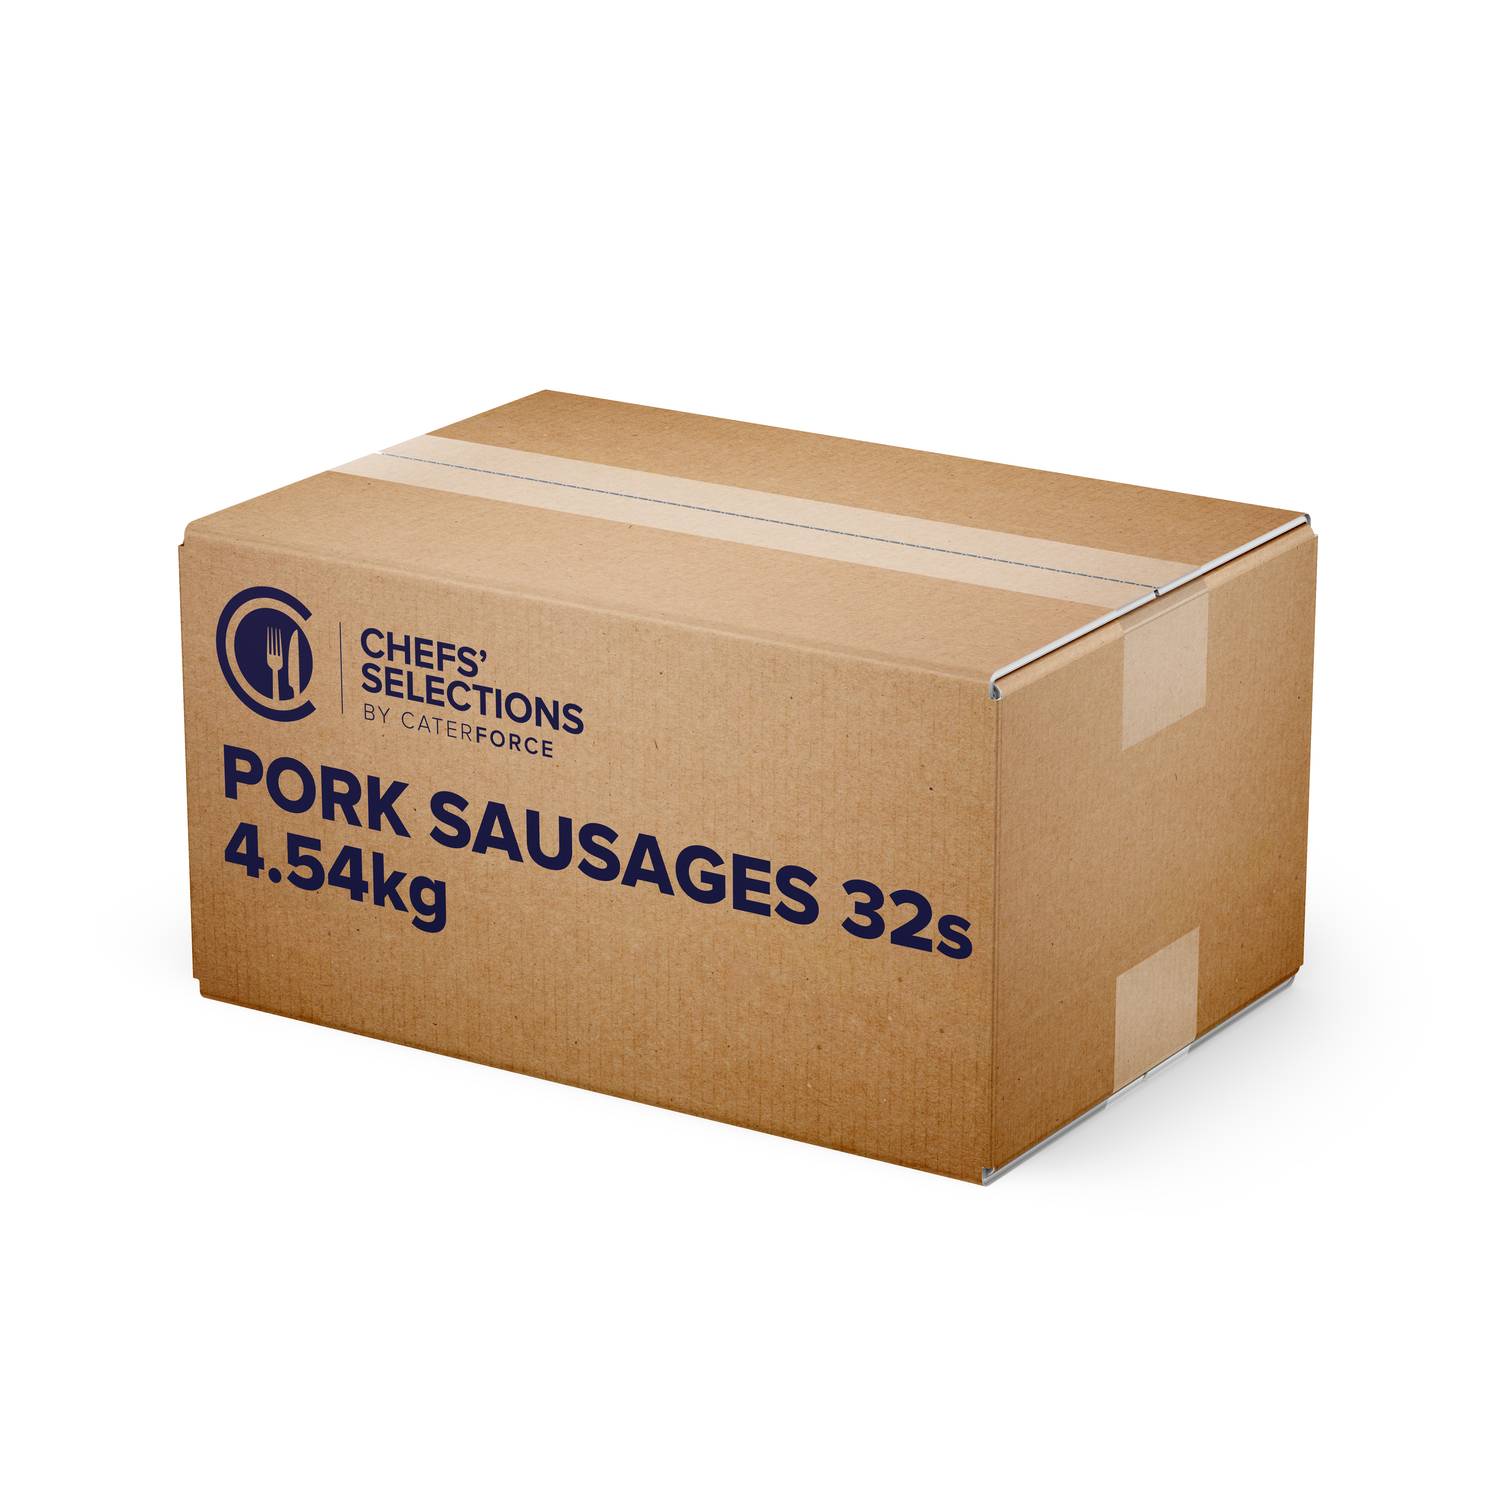 Chefs’ Selections Pork Sausages 32’s (1 x 4.54kg)